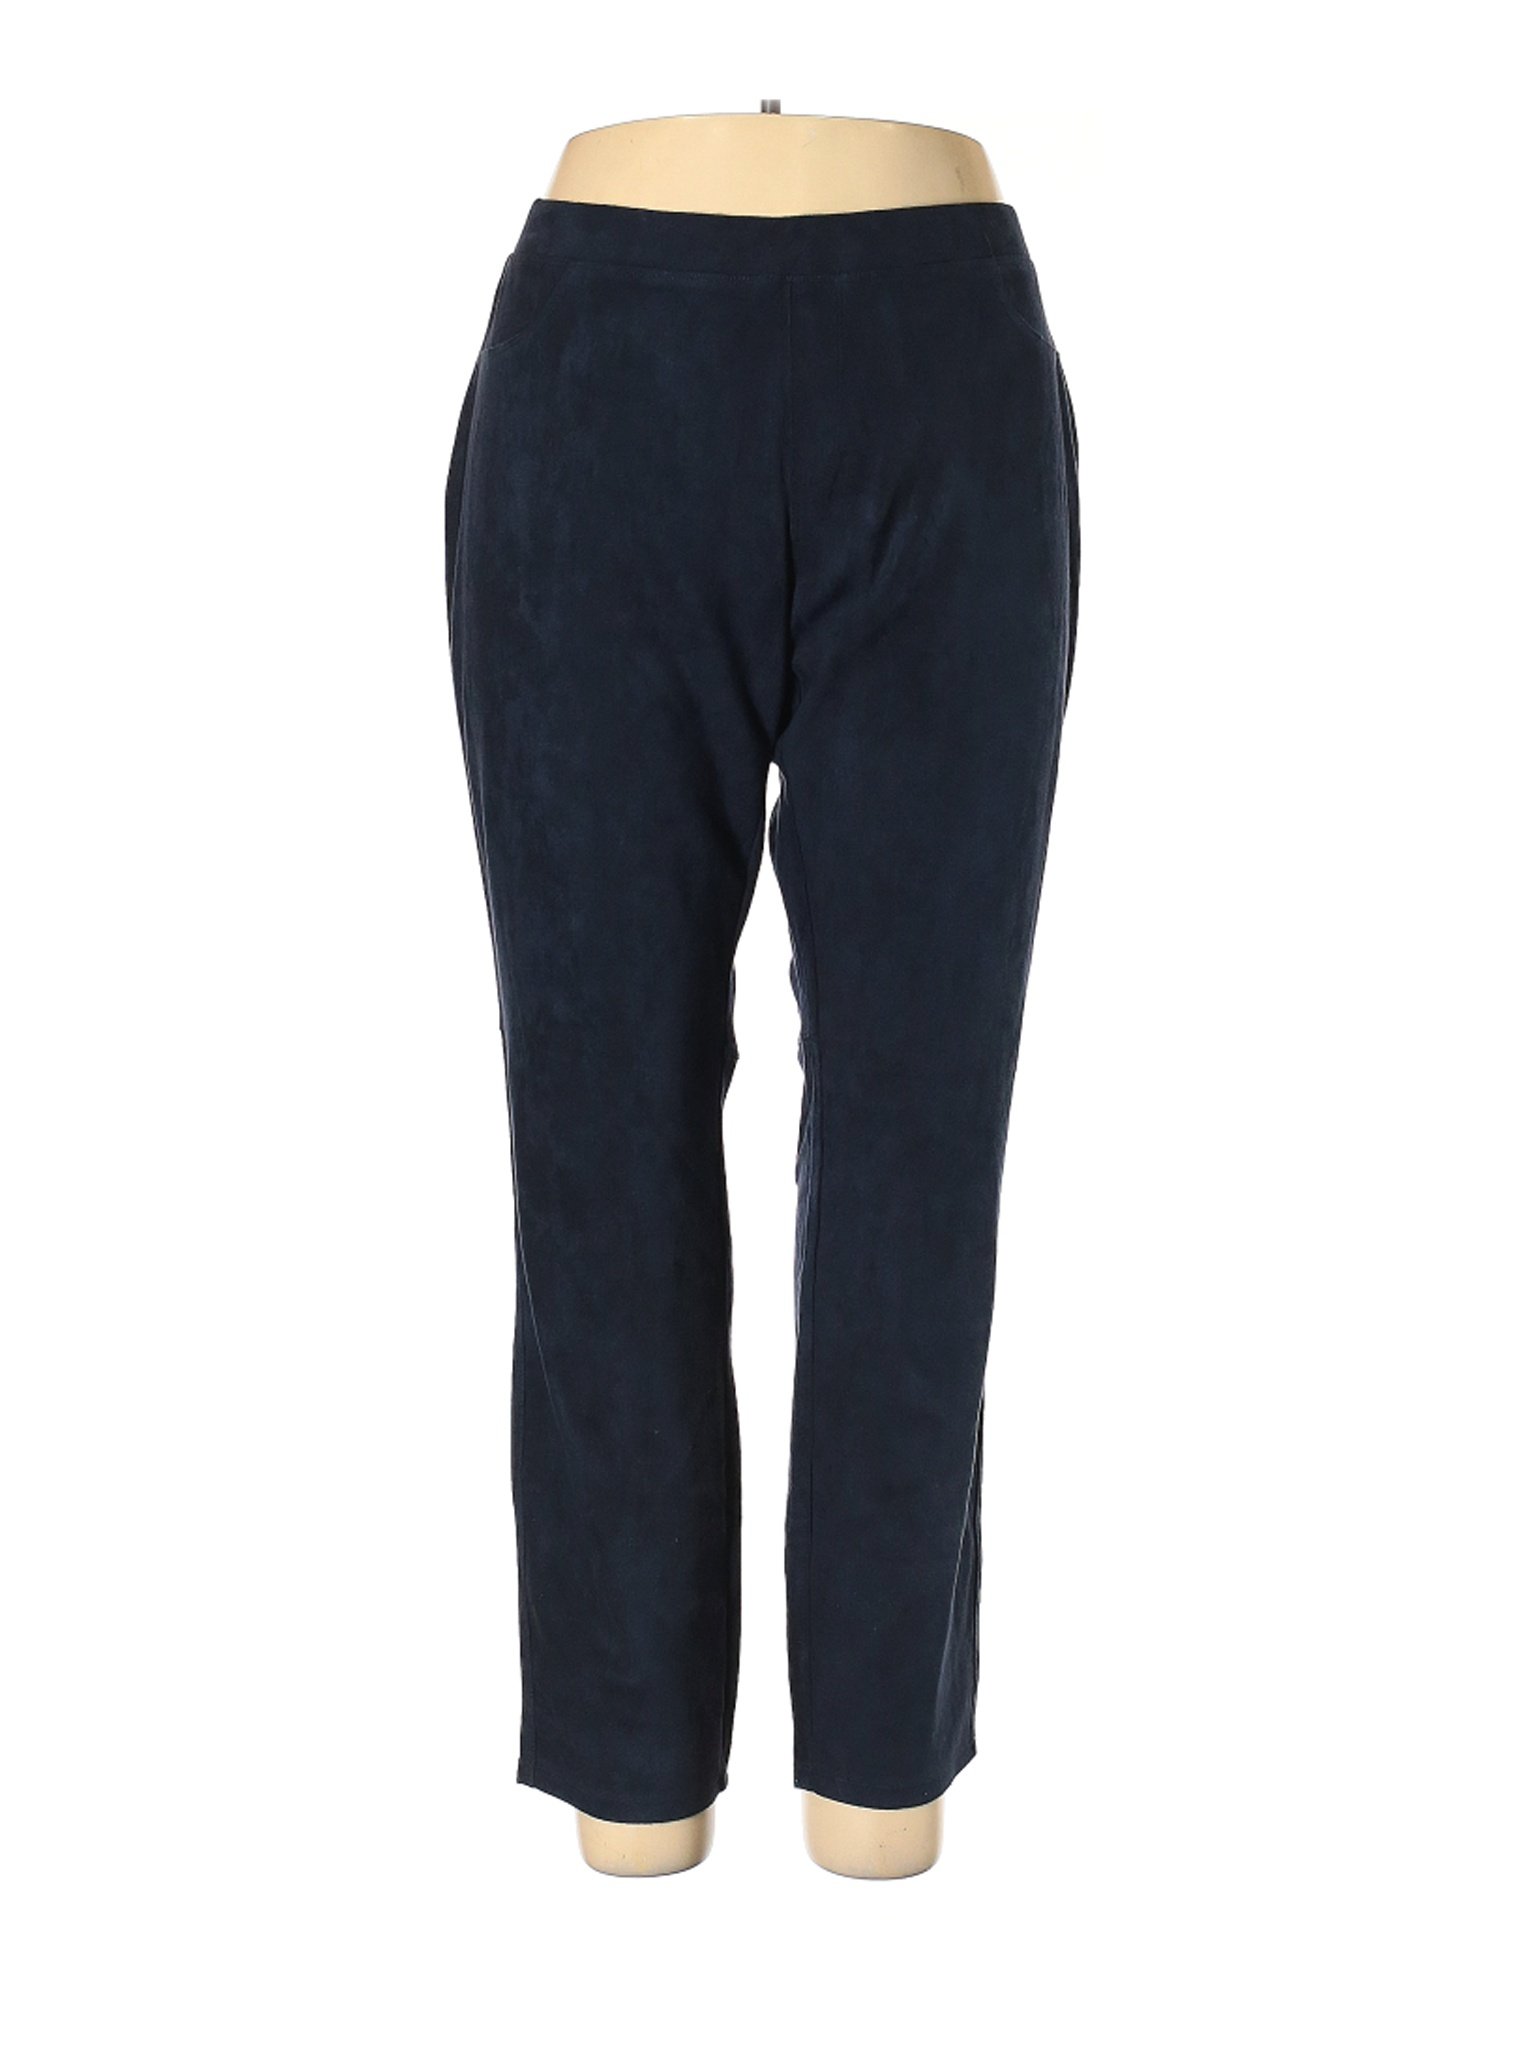 Crown & Ivy Women Blue Casual Pants 18 Plus | eBay